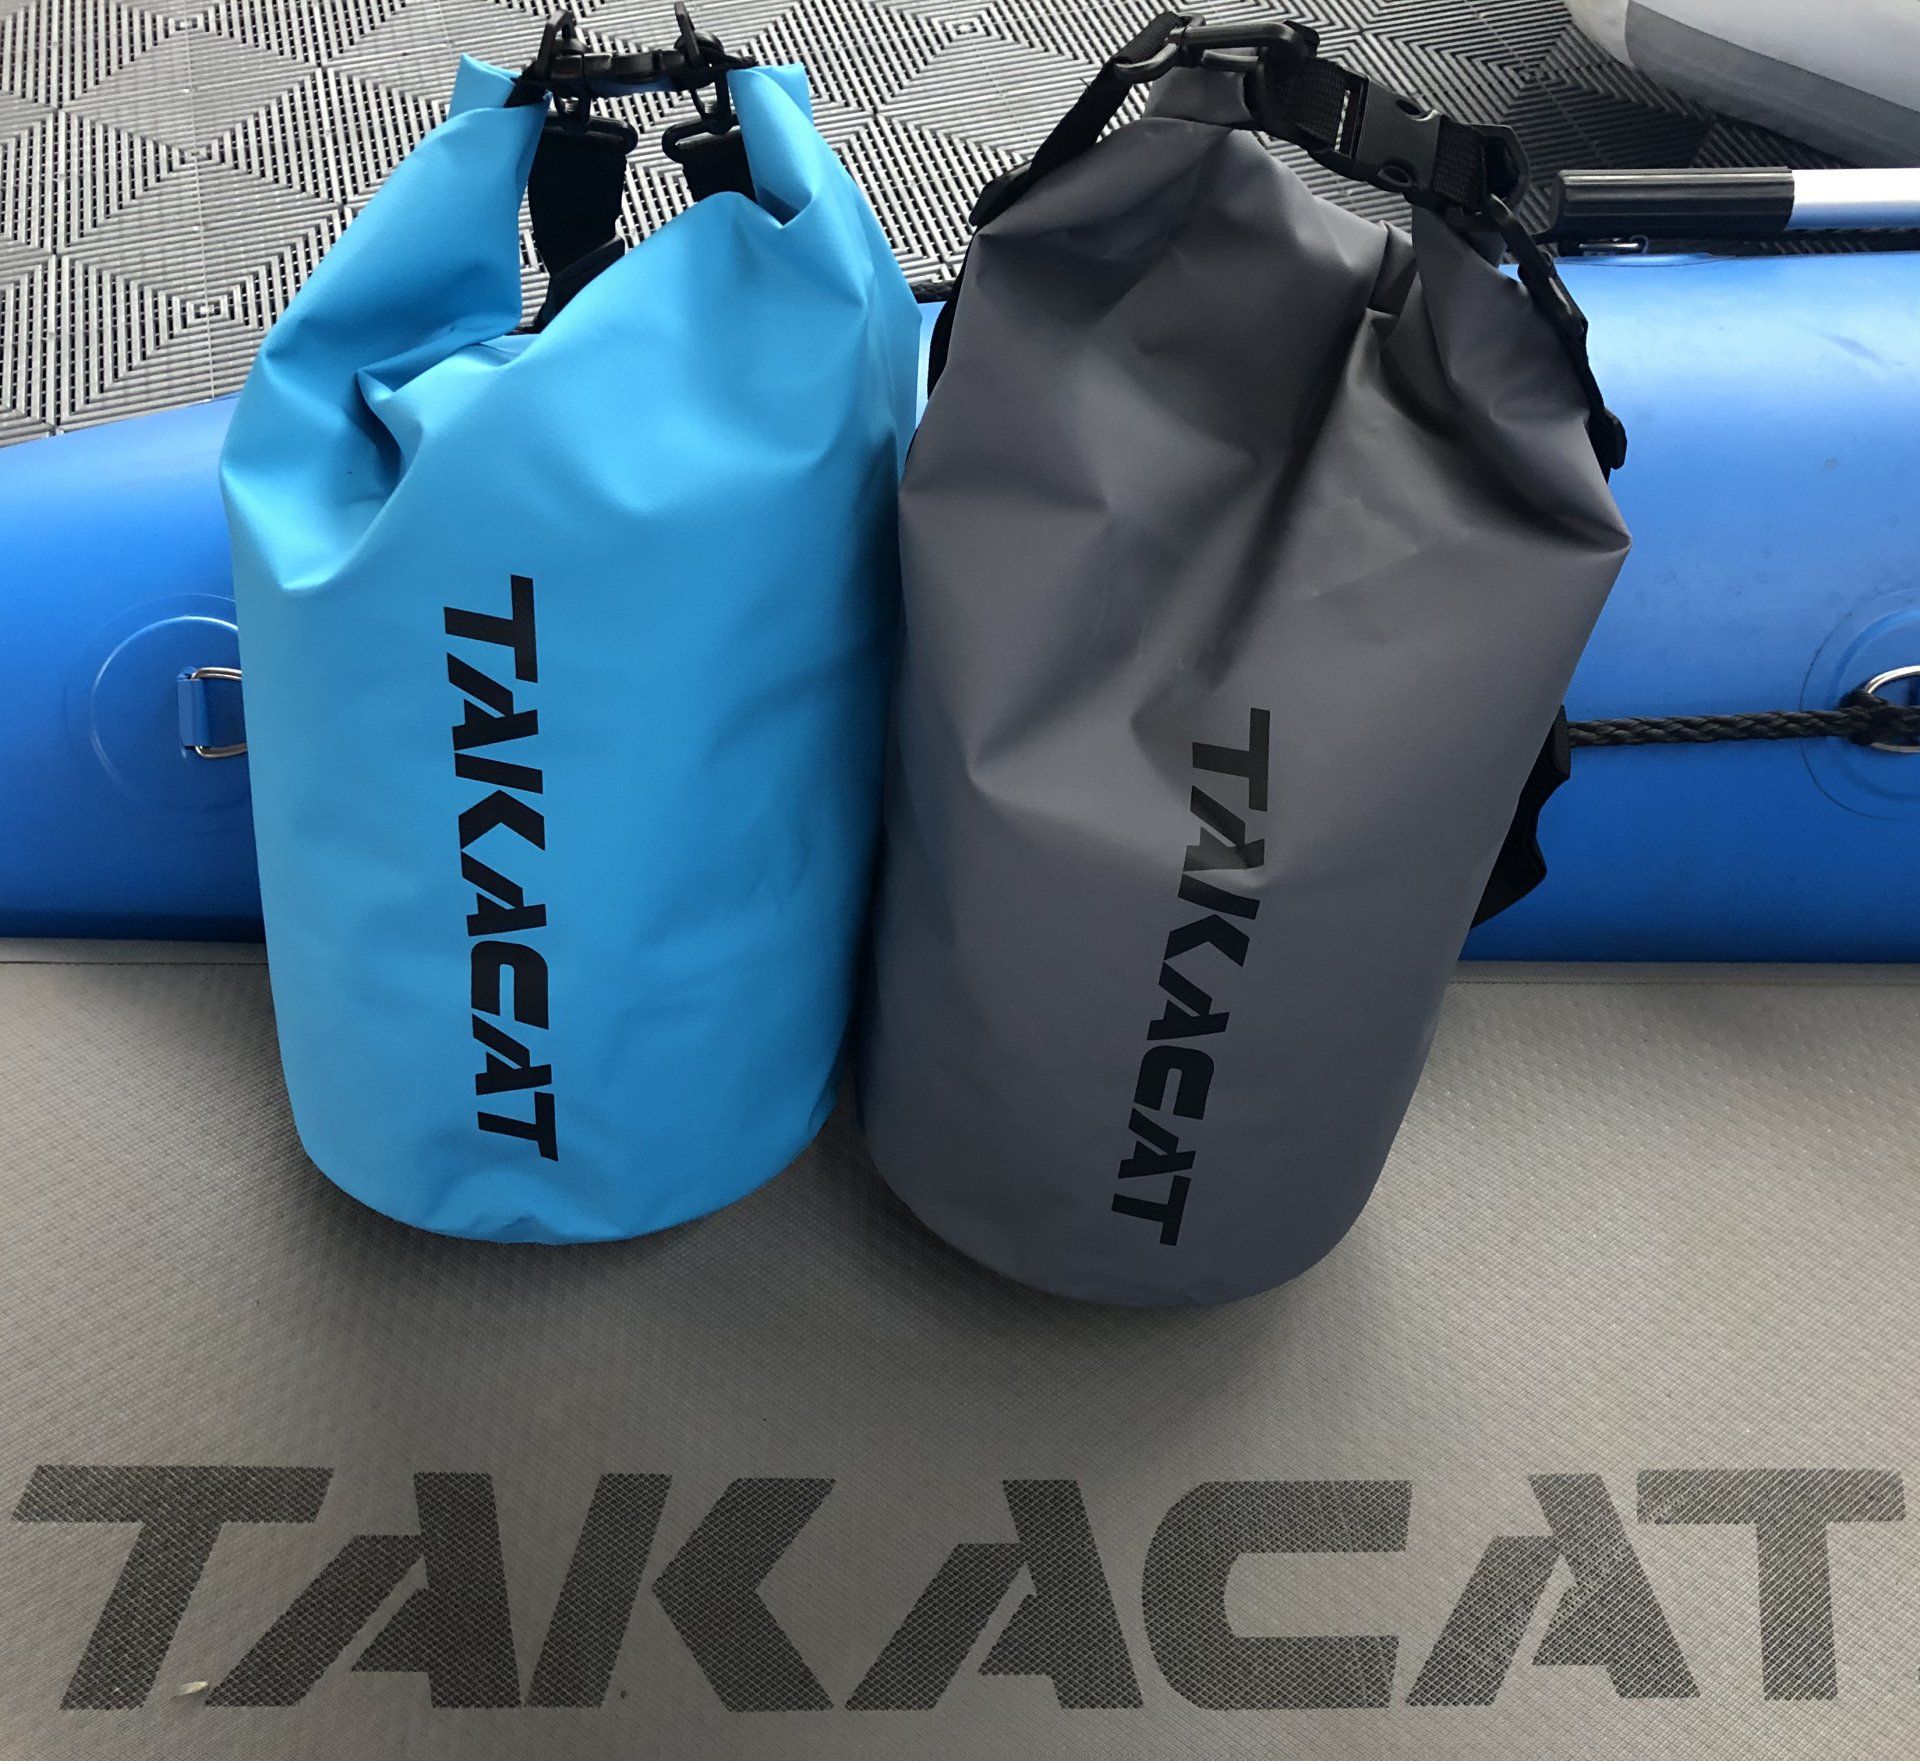 The TAKACAT-BAG protects against rain, wetness and splashing water.